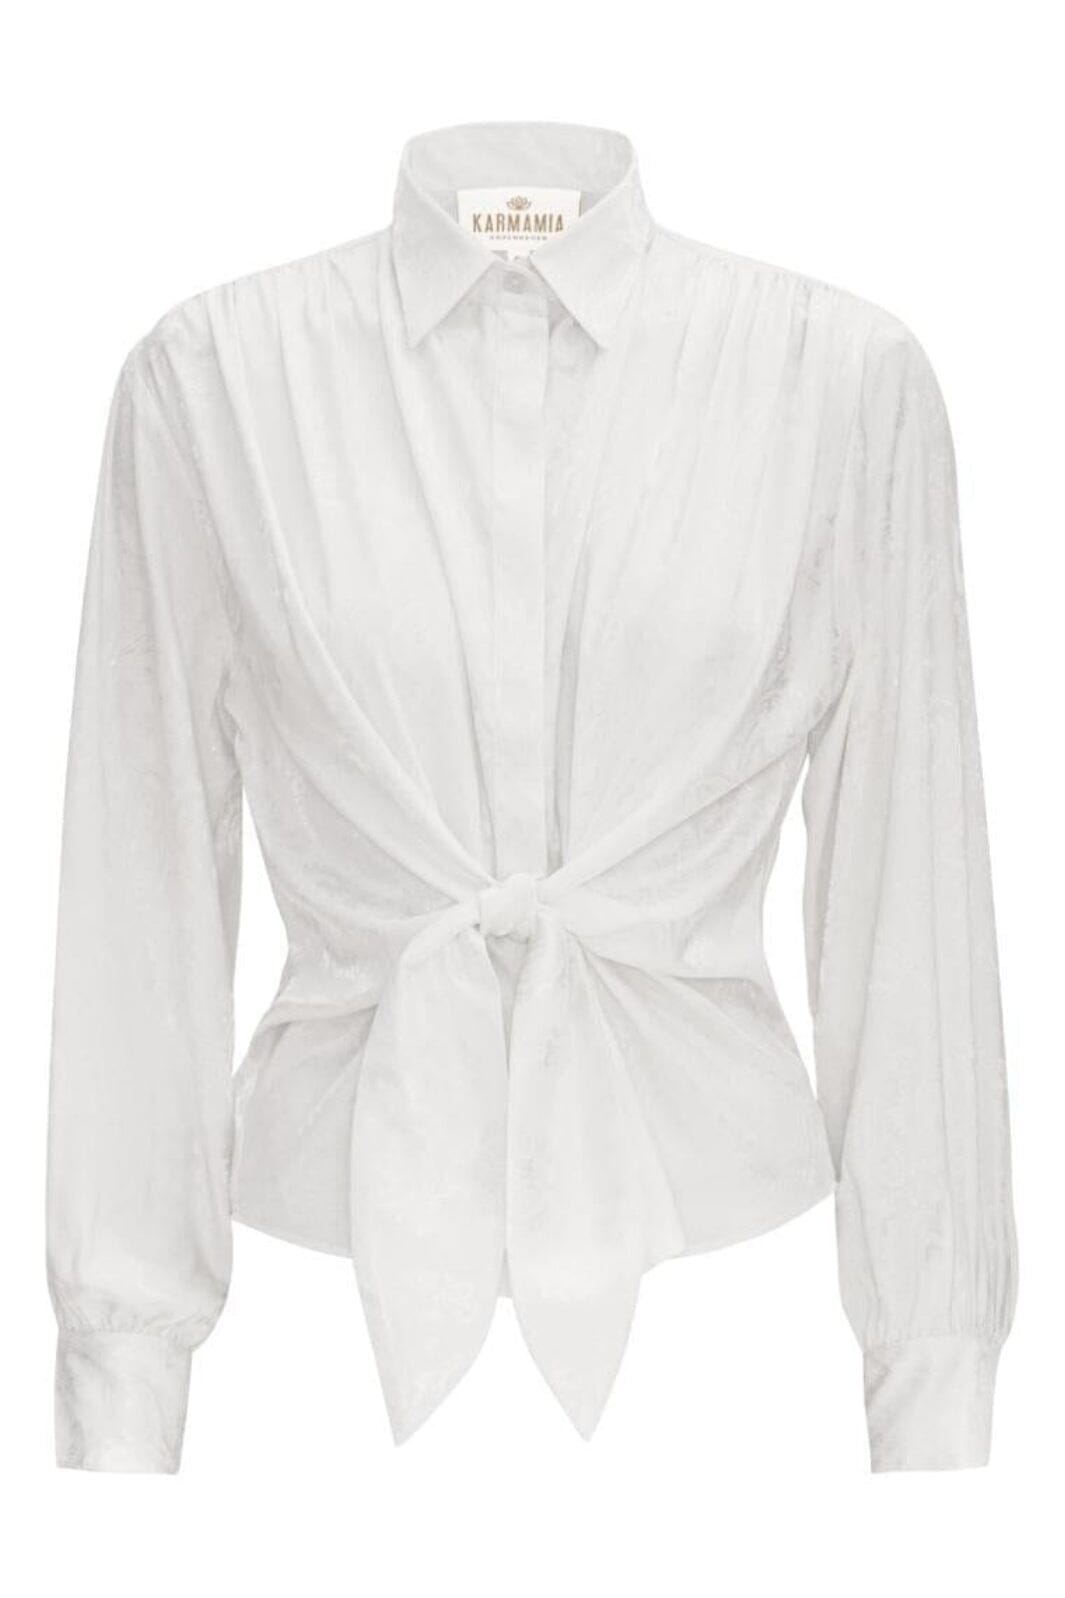 Karmamia - Lee Shirt - White Paisley Jacquard Skjorter 